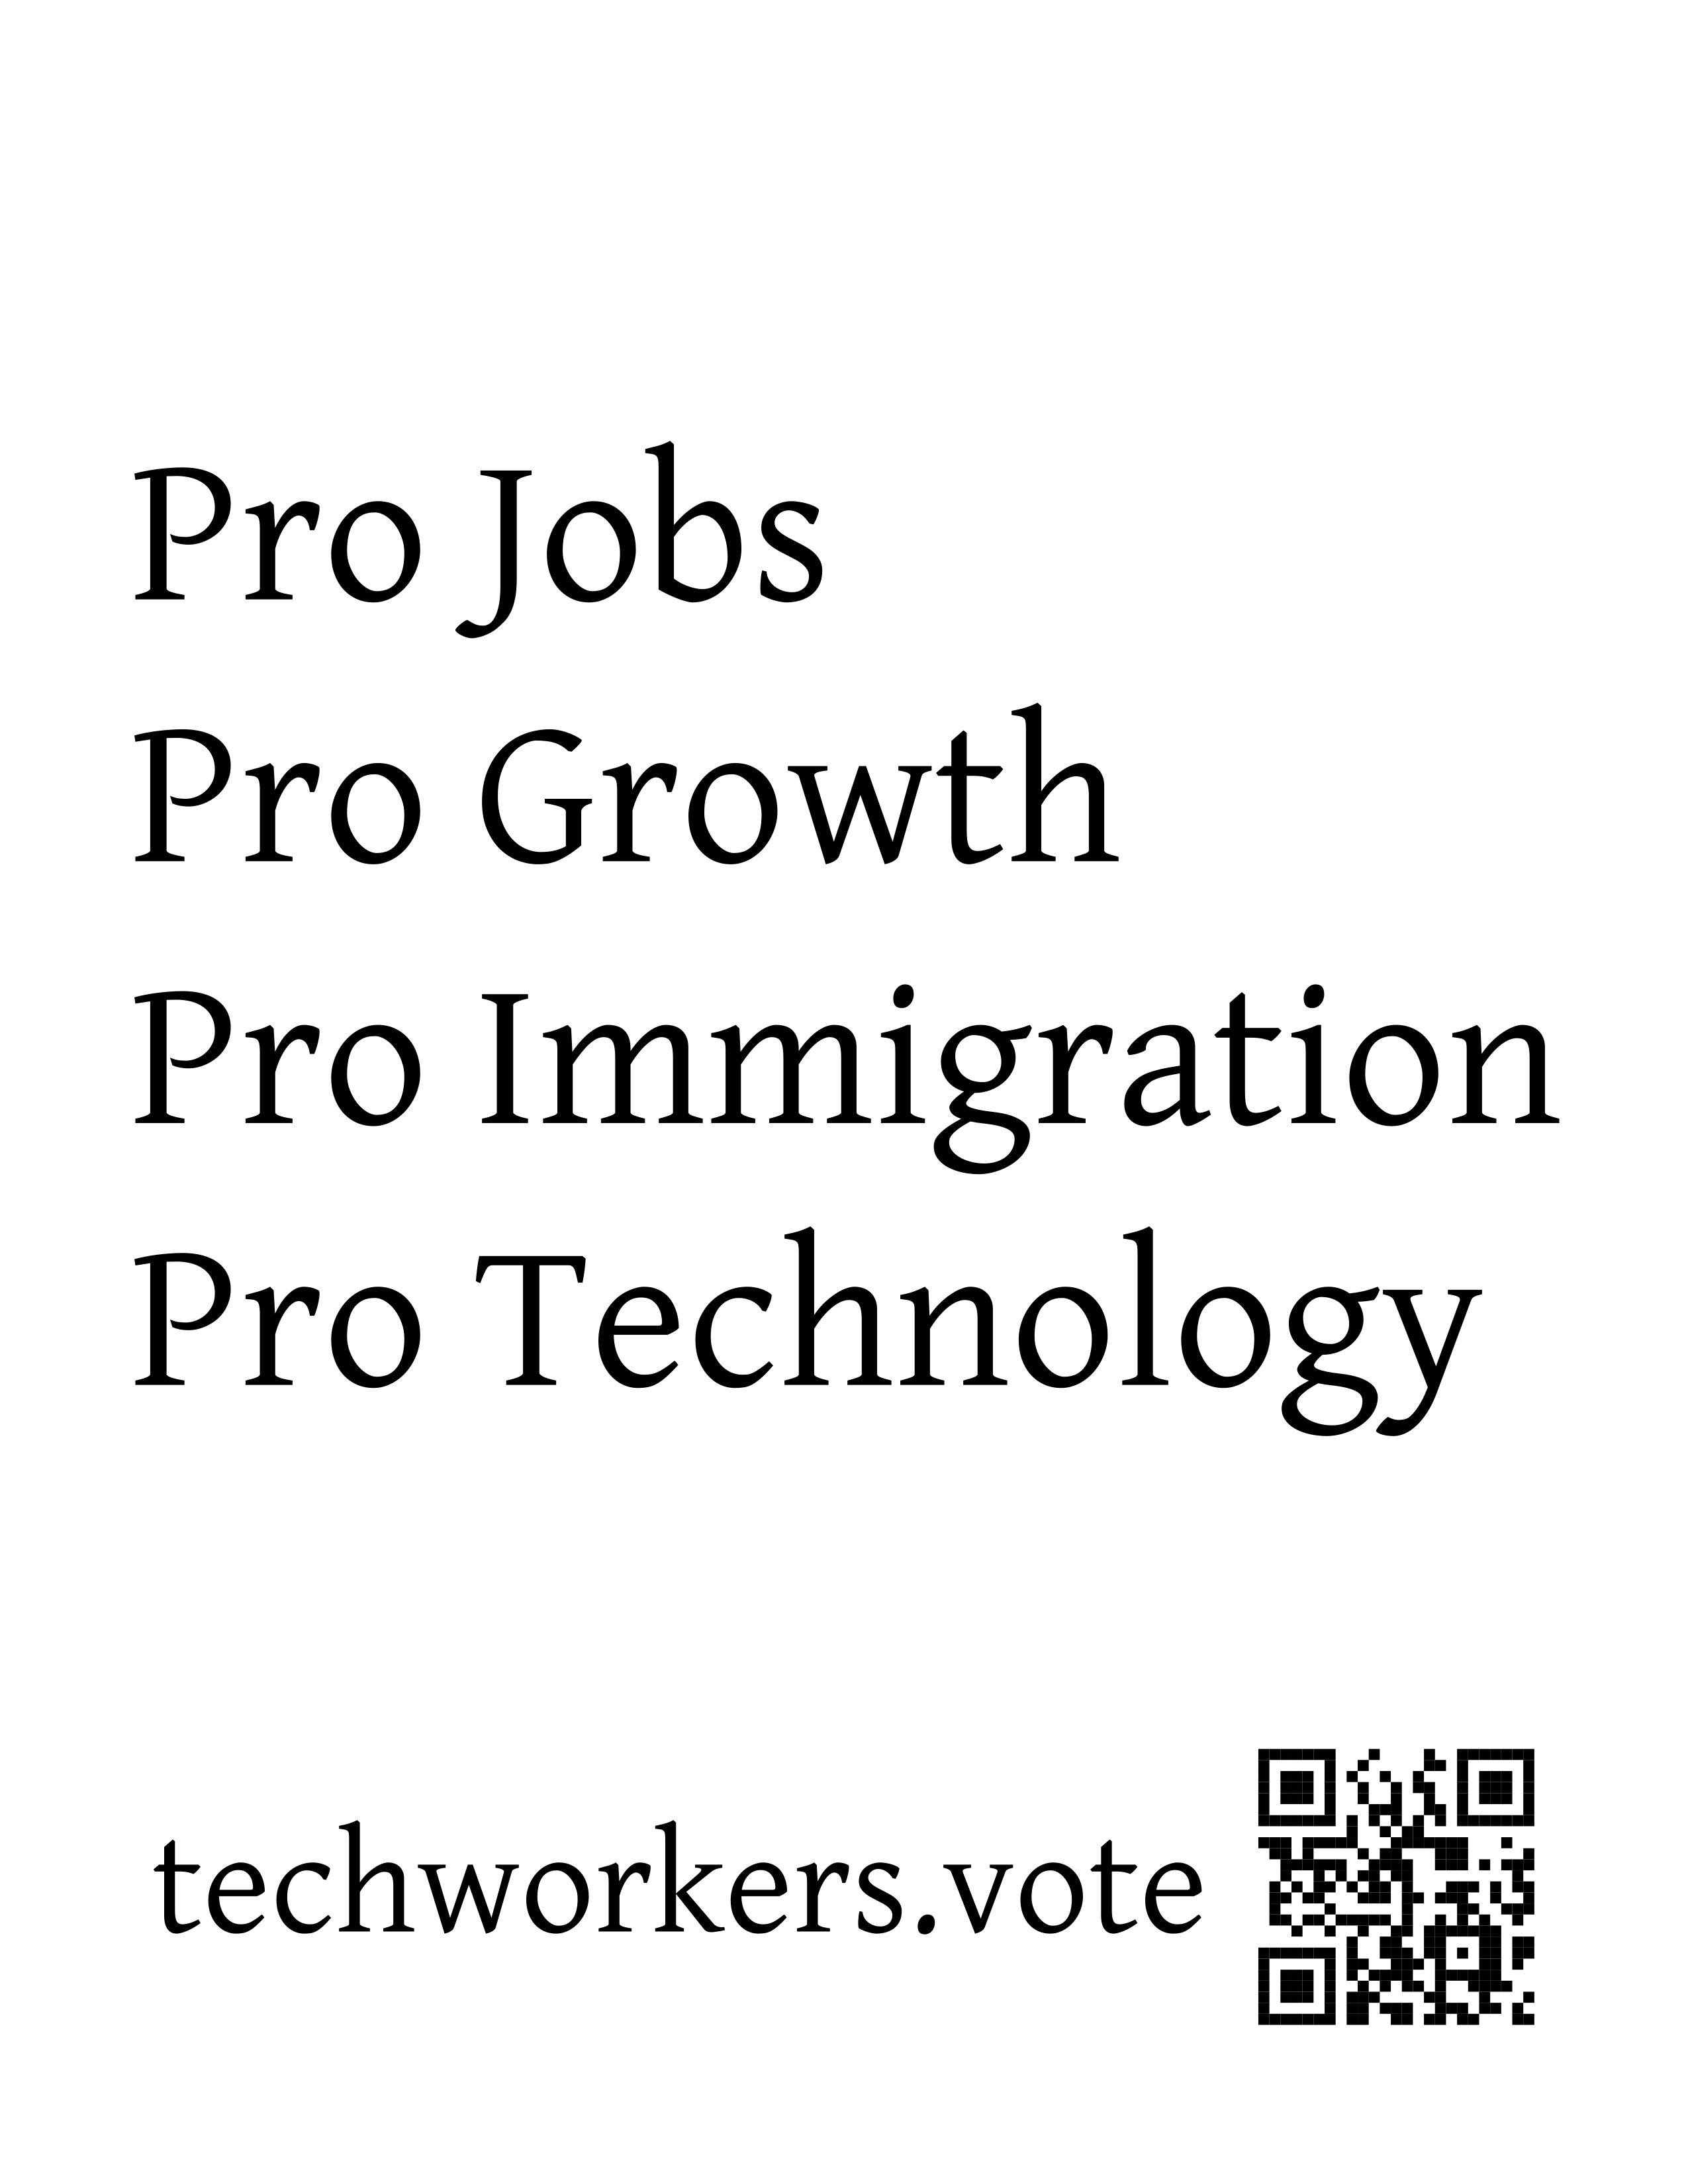 Pro jobs. Pro growth. Pro immigration. Pro technology.